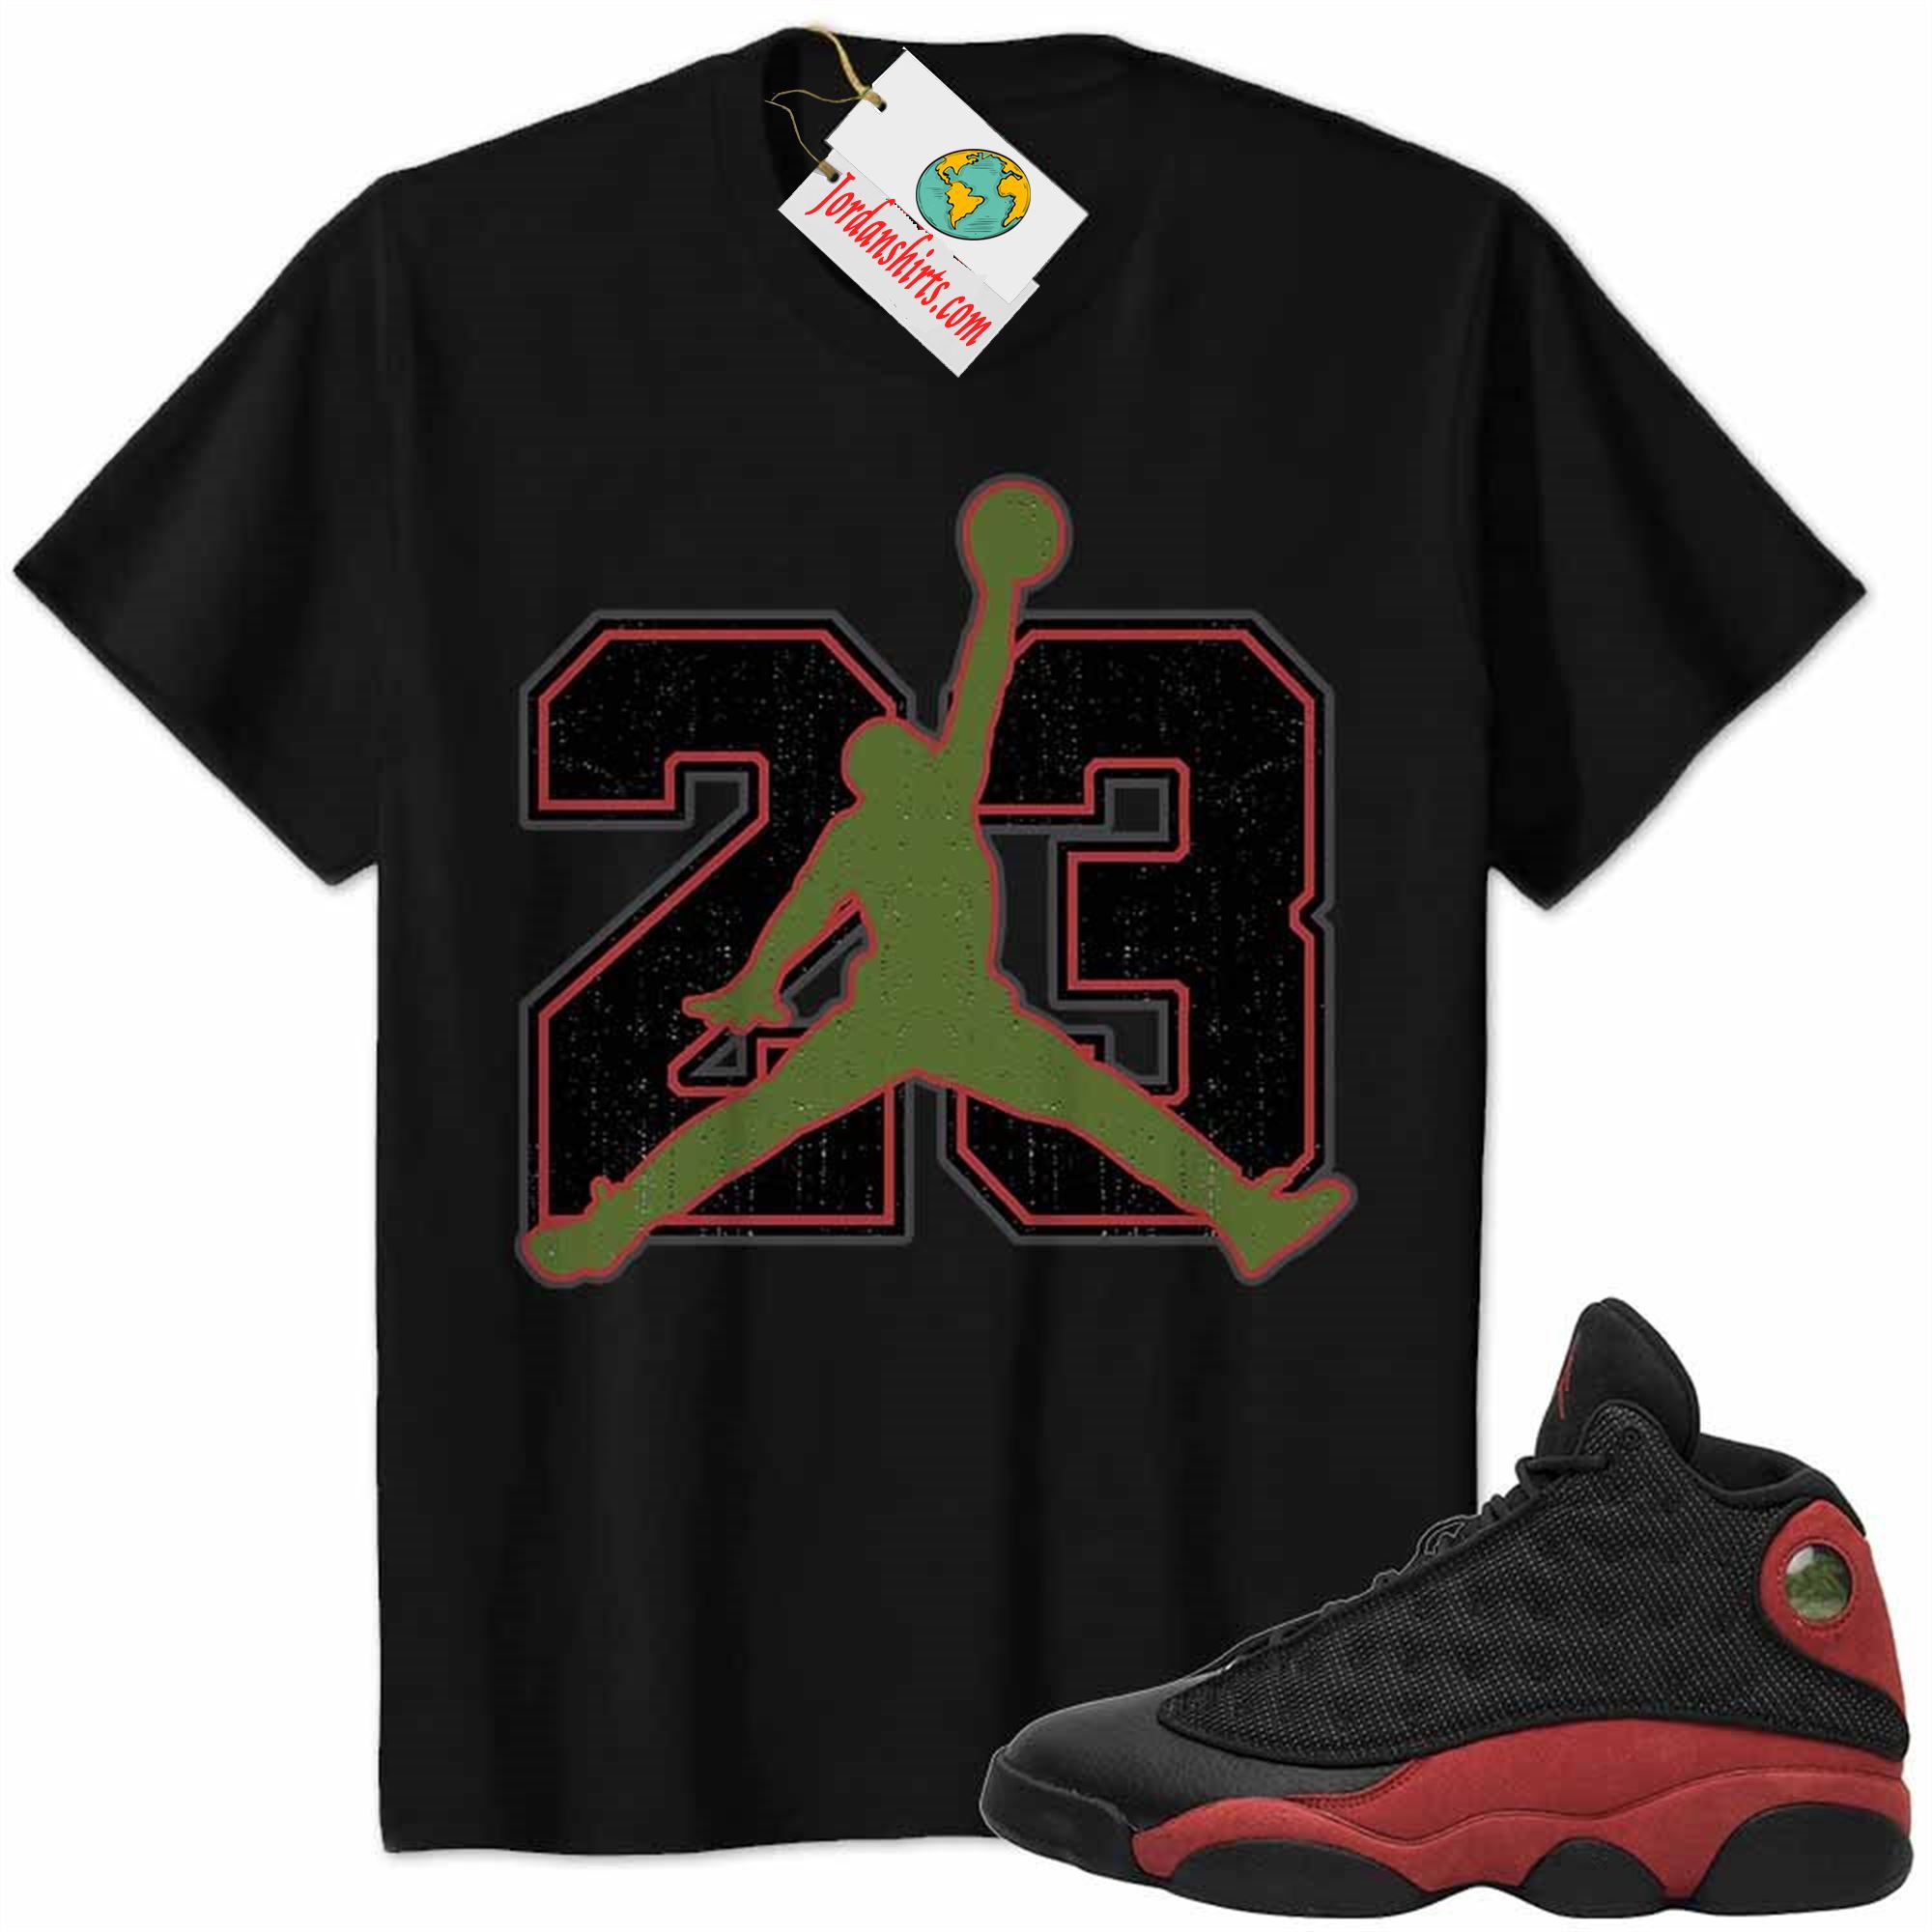 Jordan 13 Shirt, Jordan 13 Bred Shirt Jumpman No23 Black Size Up To 5xl